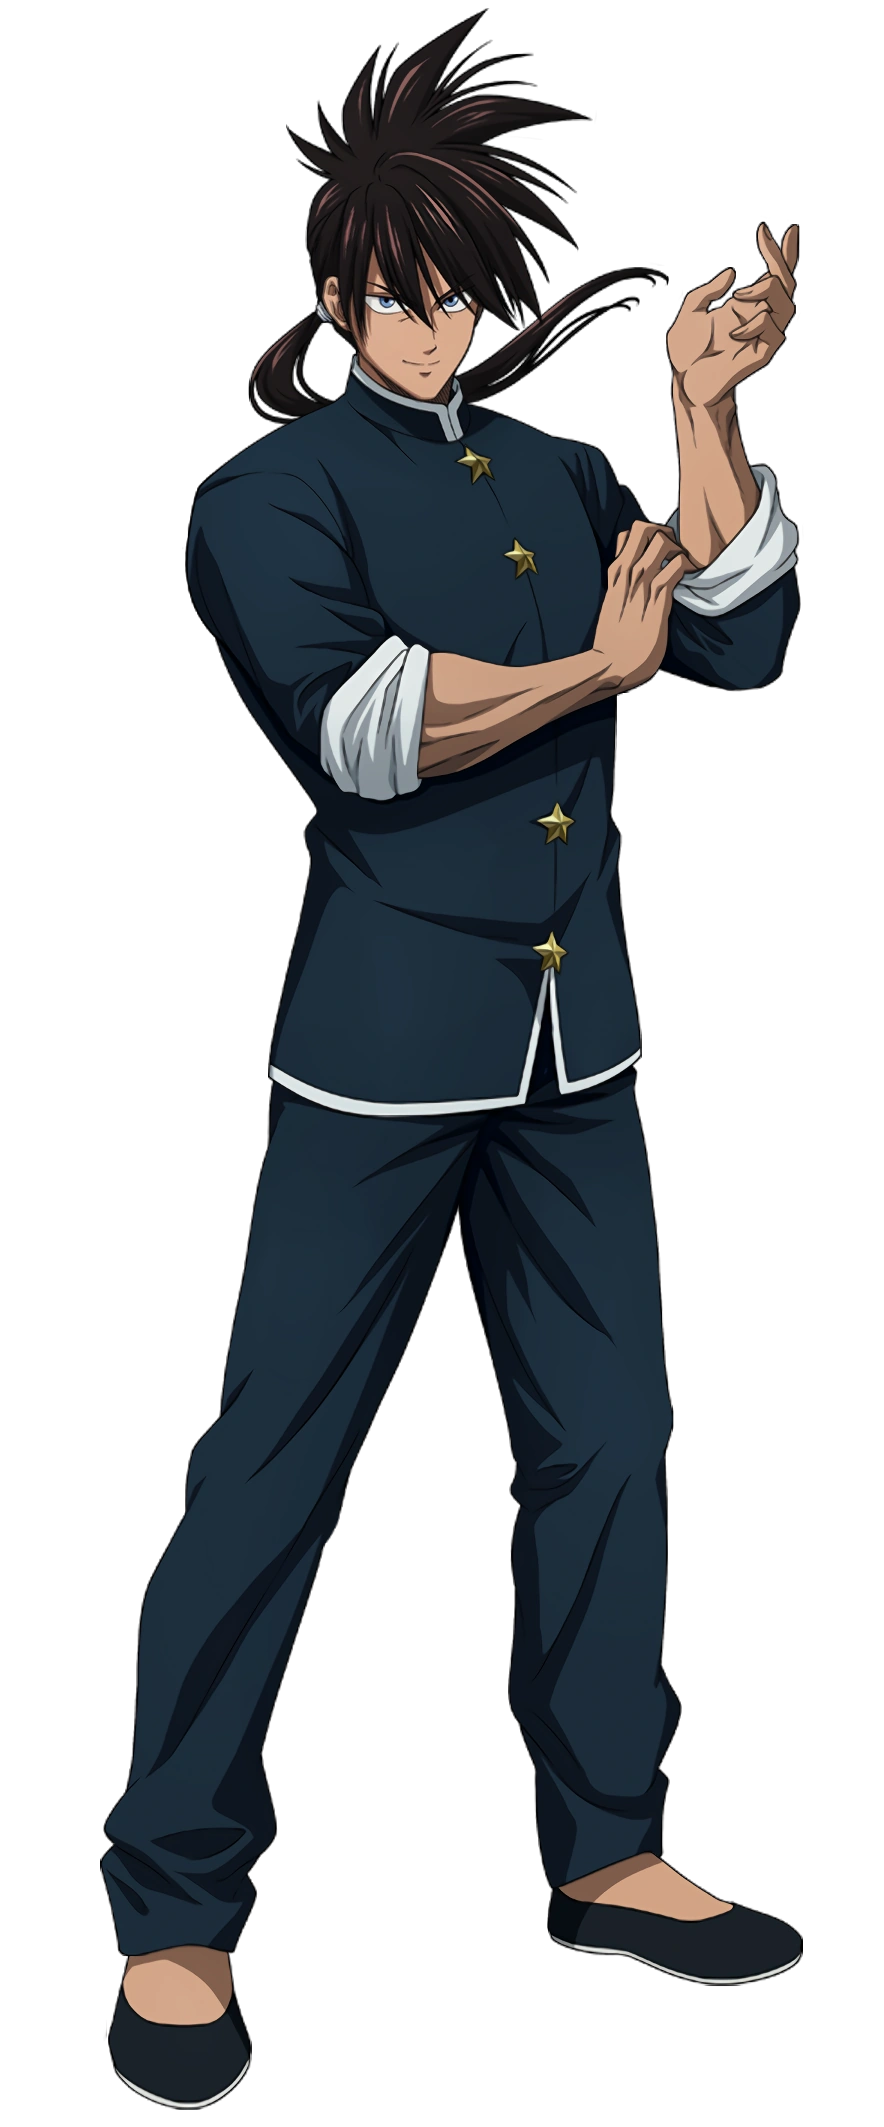 One Punch Man season 2 character sheet of Suiryu (voiced by Masaya  Matsukaze). : r/anime